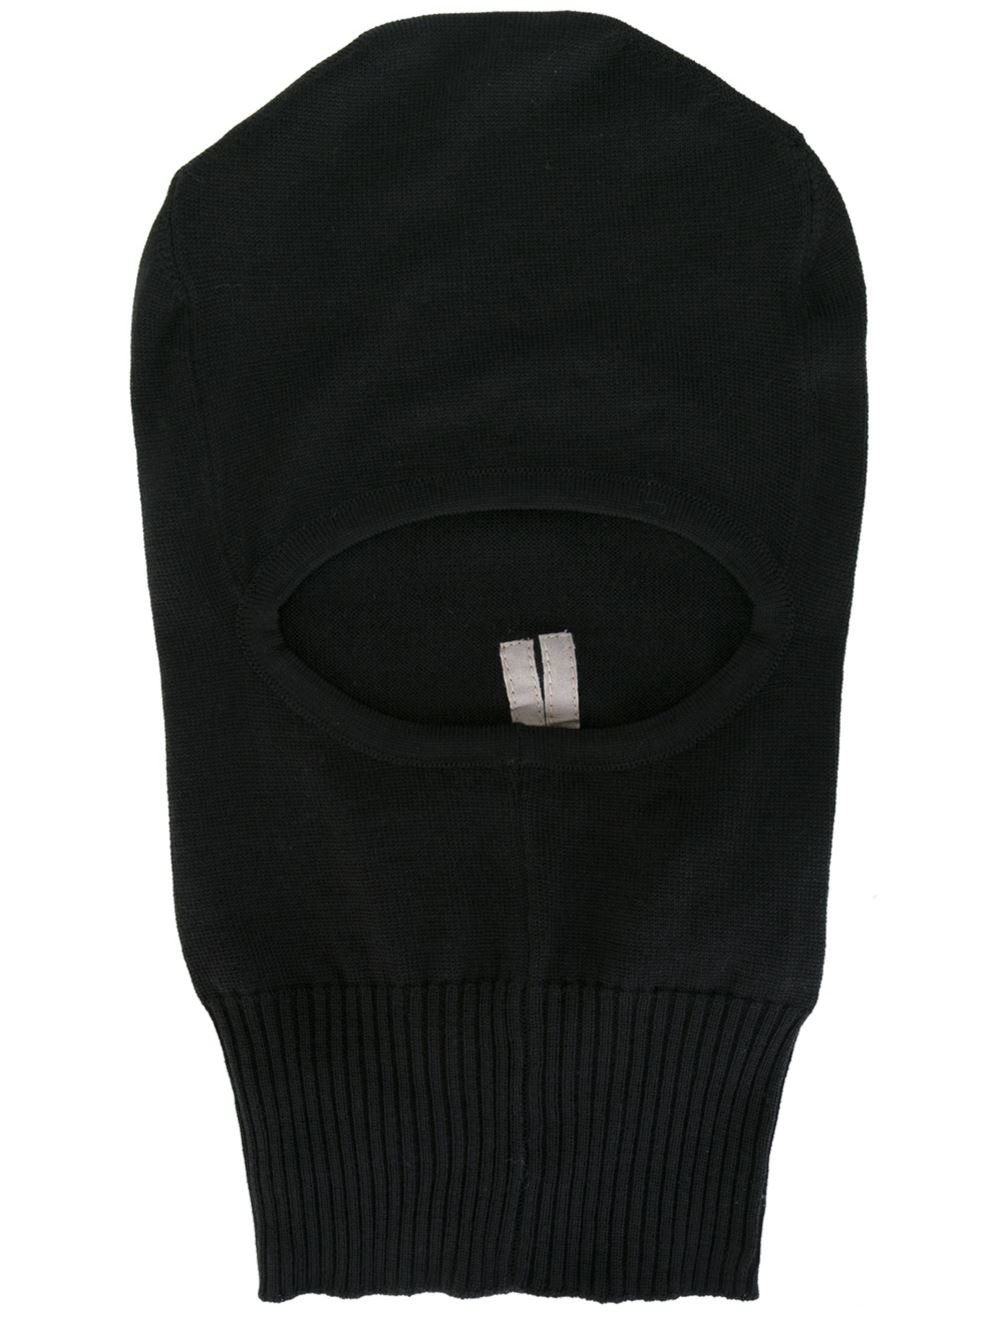 Rick Owens Wool Ski Mask Beanie in Black for Men - Lyst